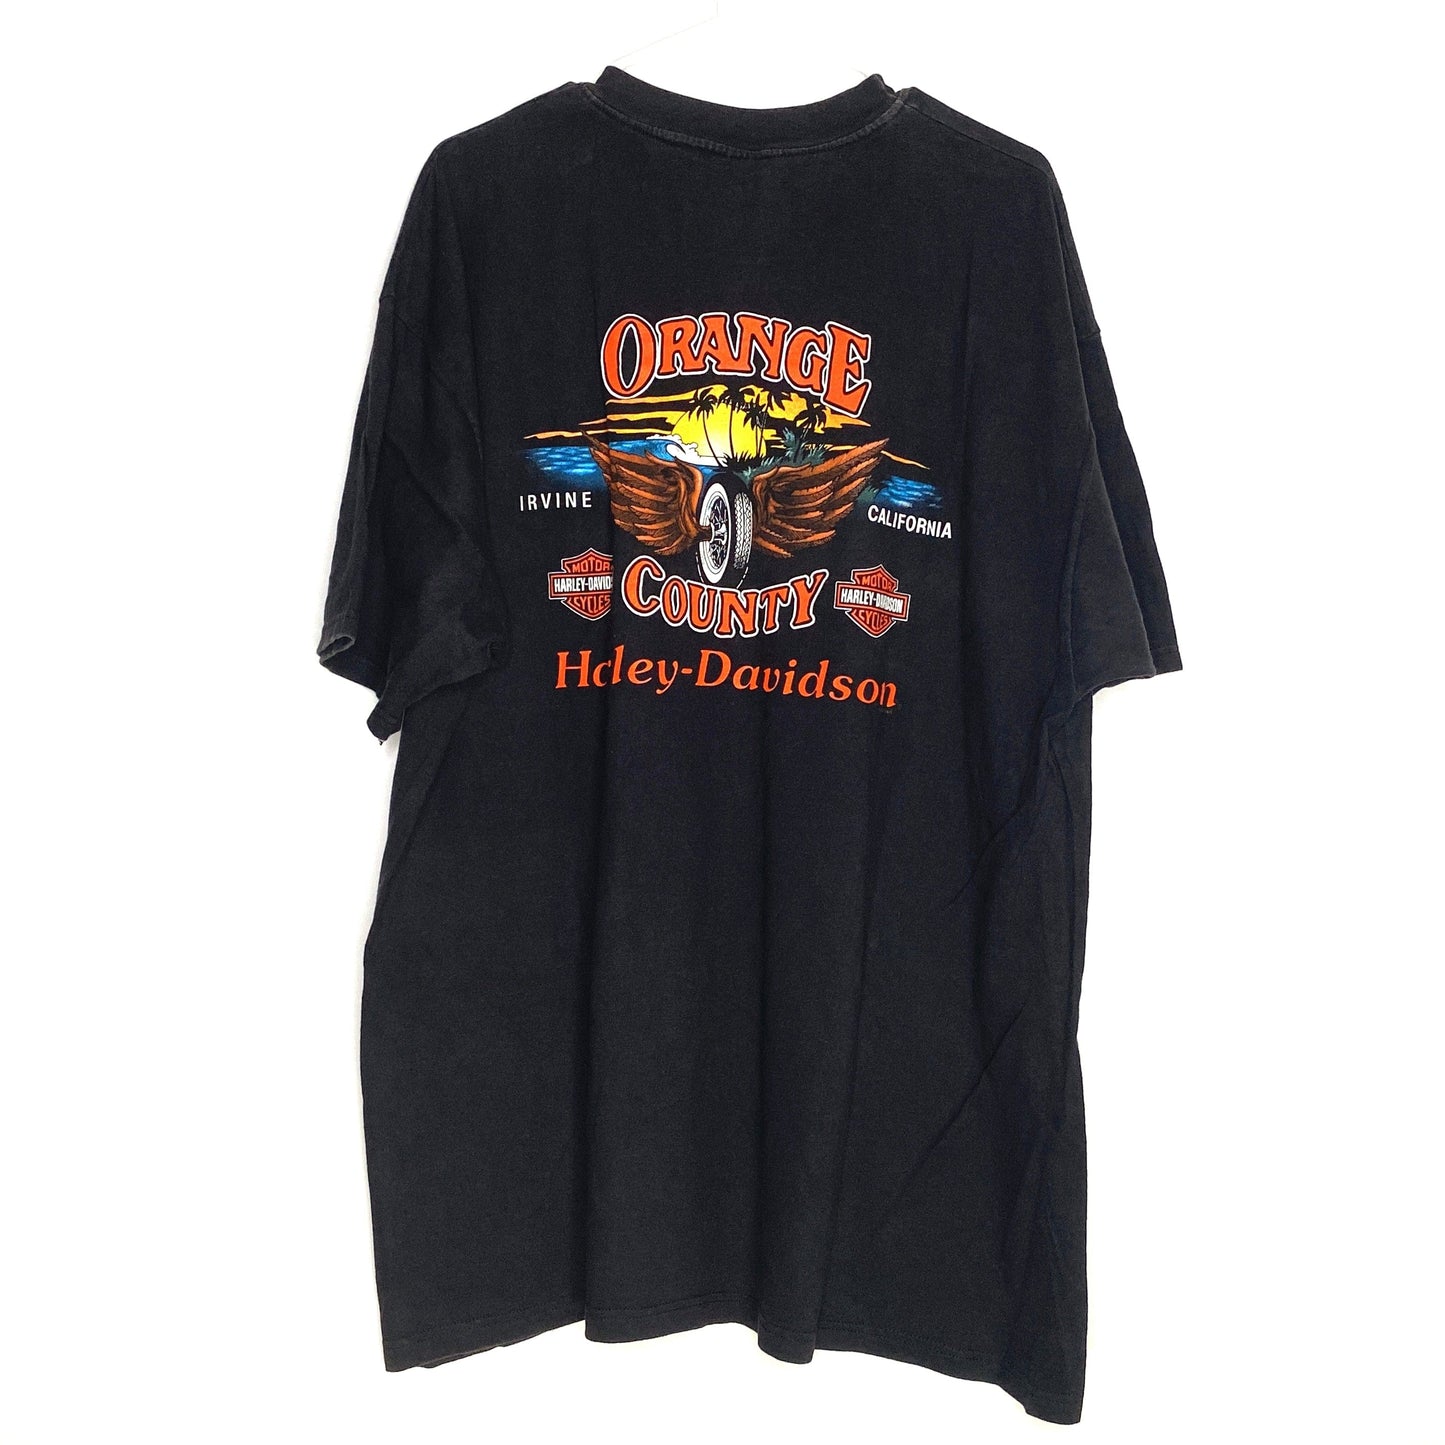 Harley Davidson Mens Size 2XL Black T-Shirt “Feel The Power” Orange County HD S/s